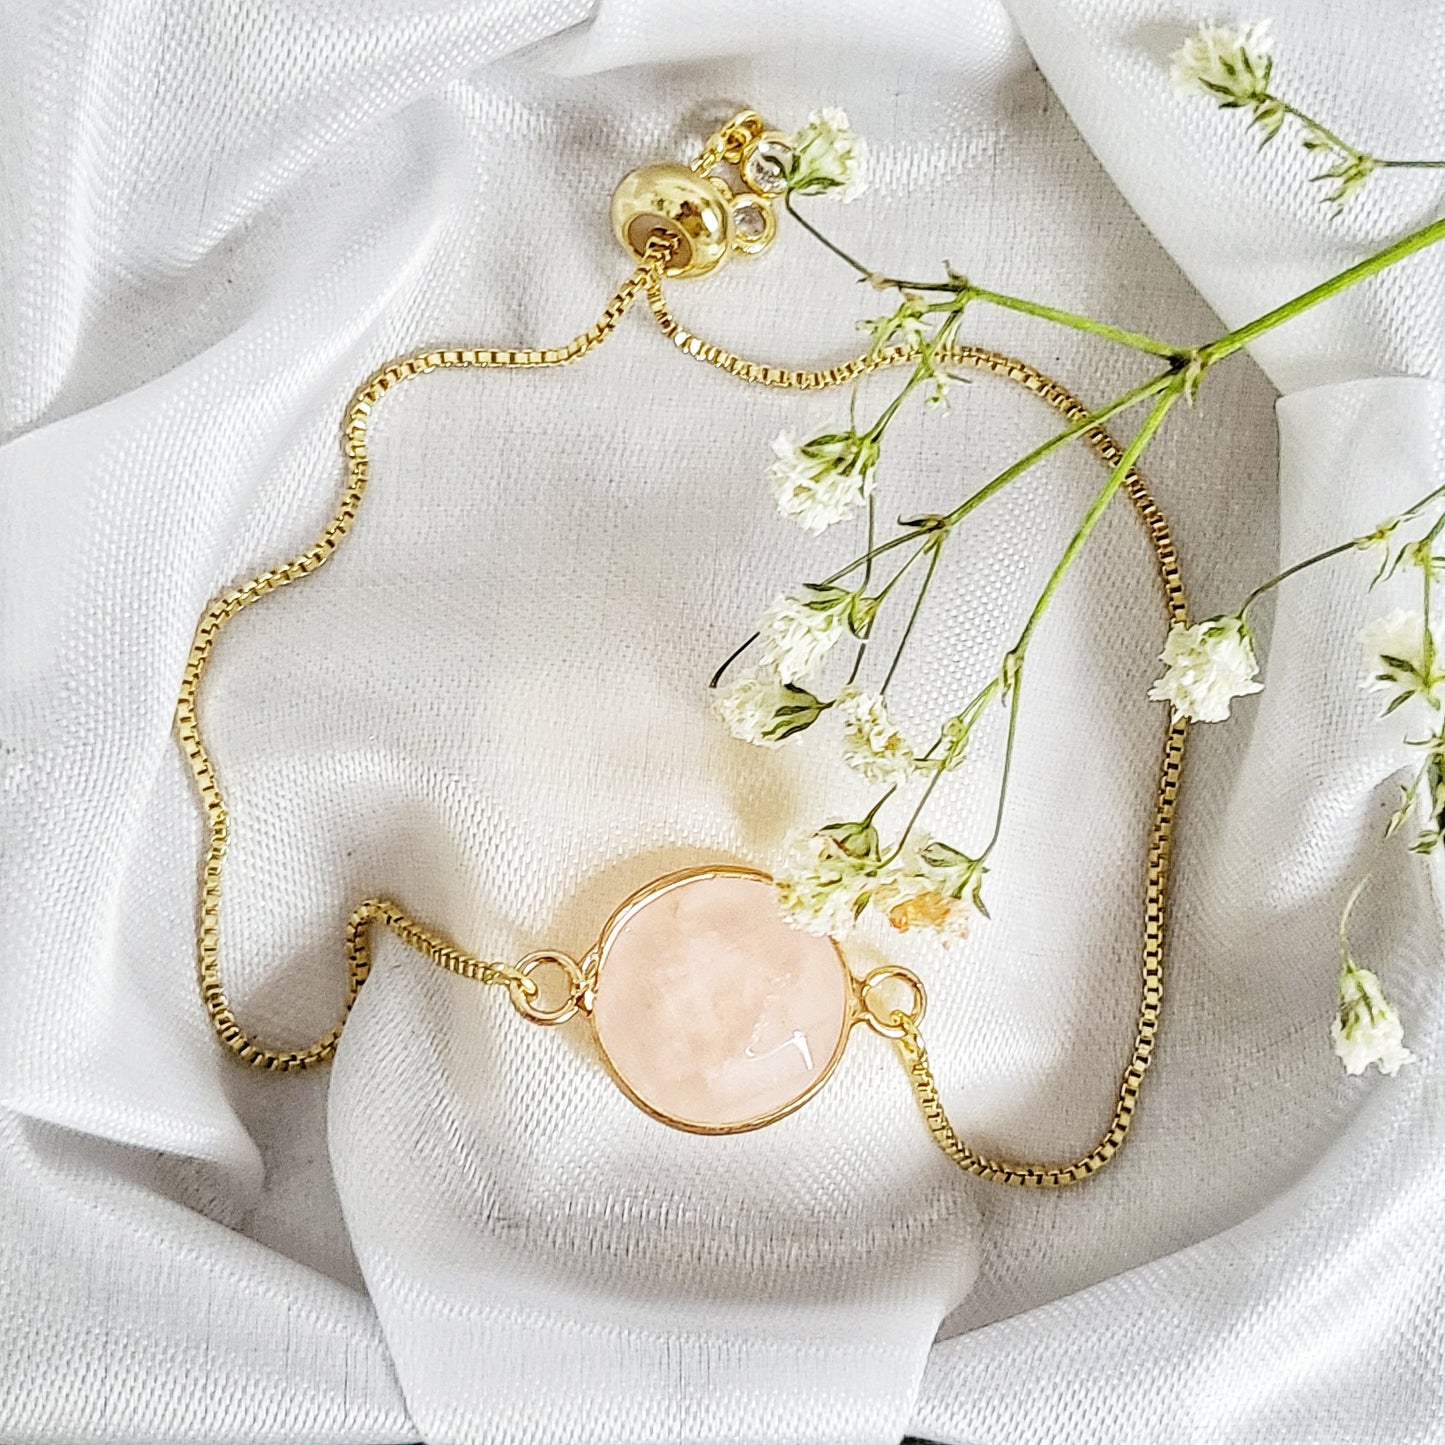 ROSE QUARTZ | 14K Gold Gemstone Bracelet | Crystal Healing Intention Jewelry